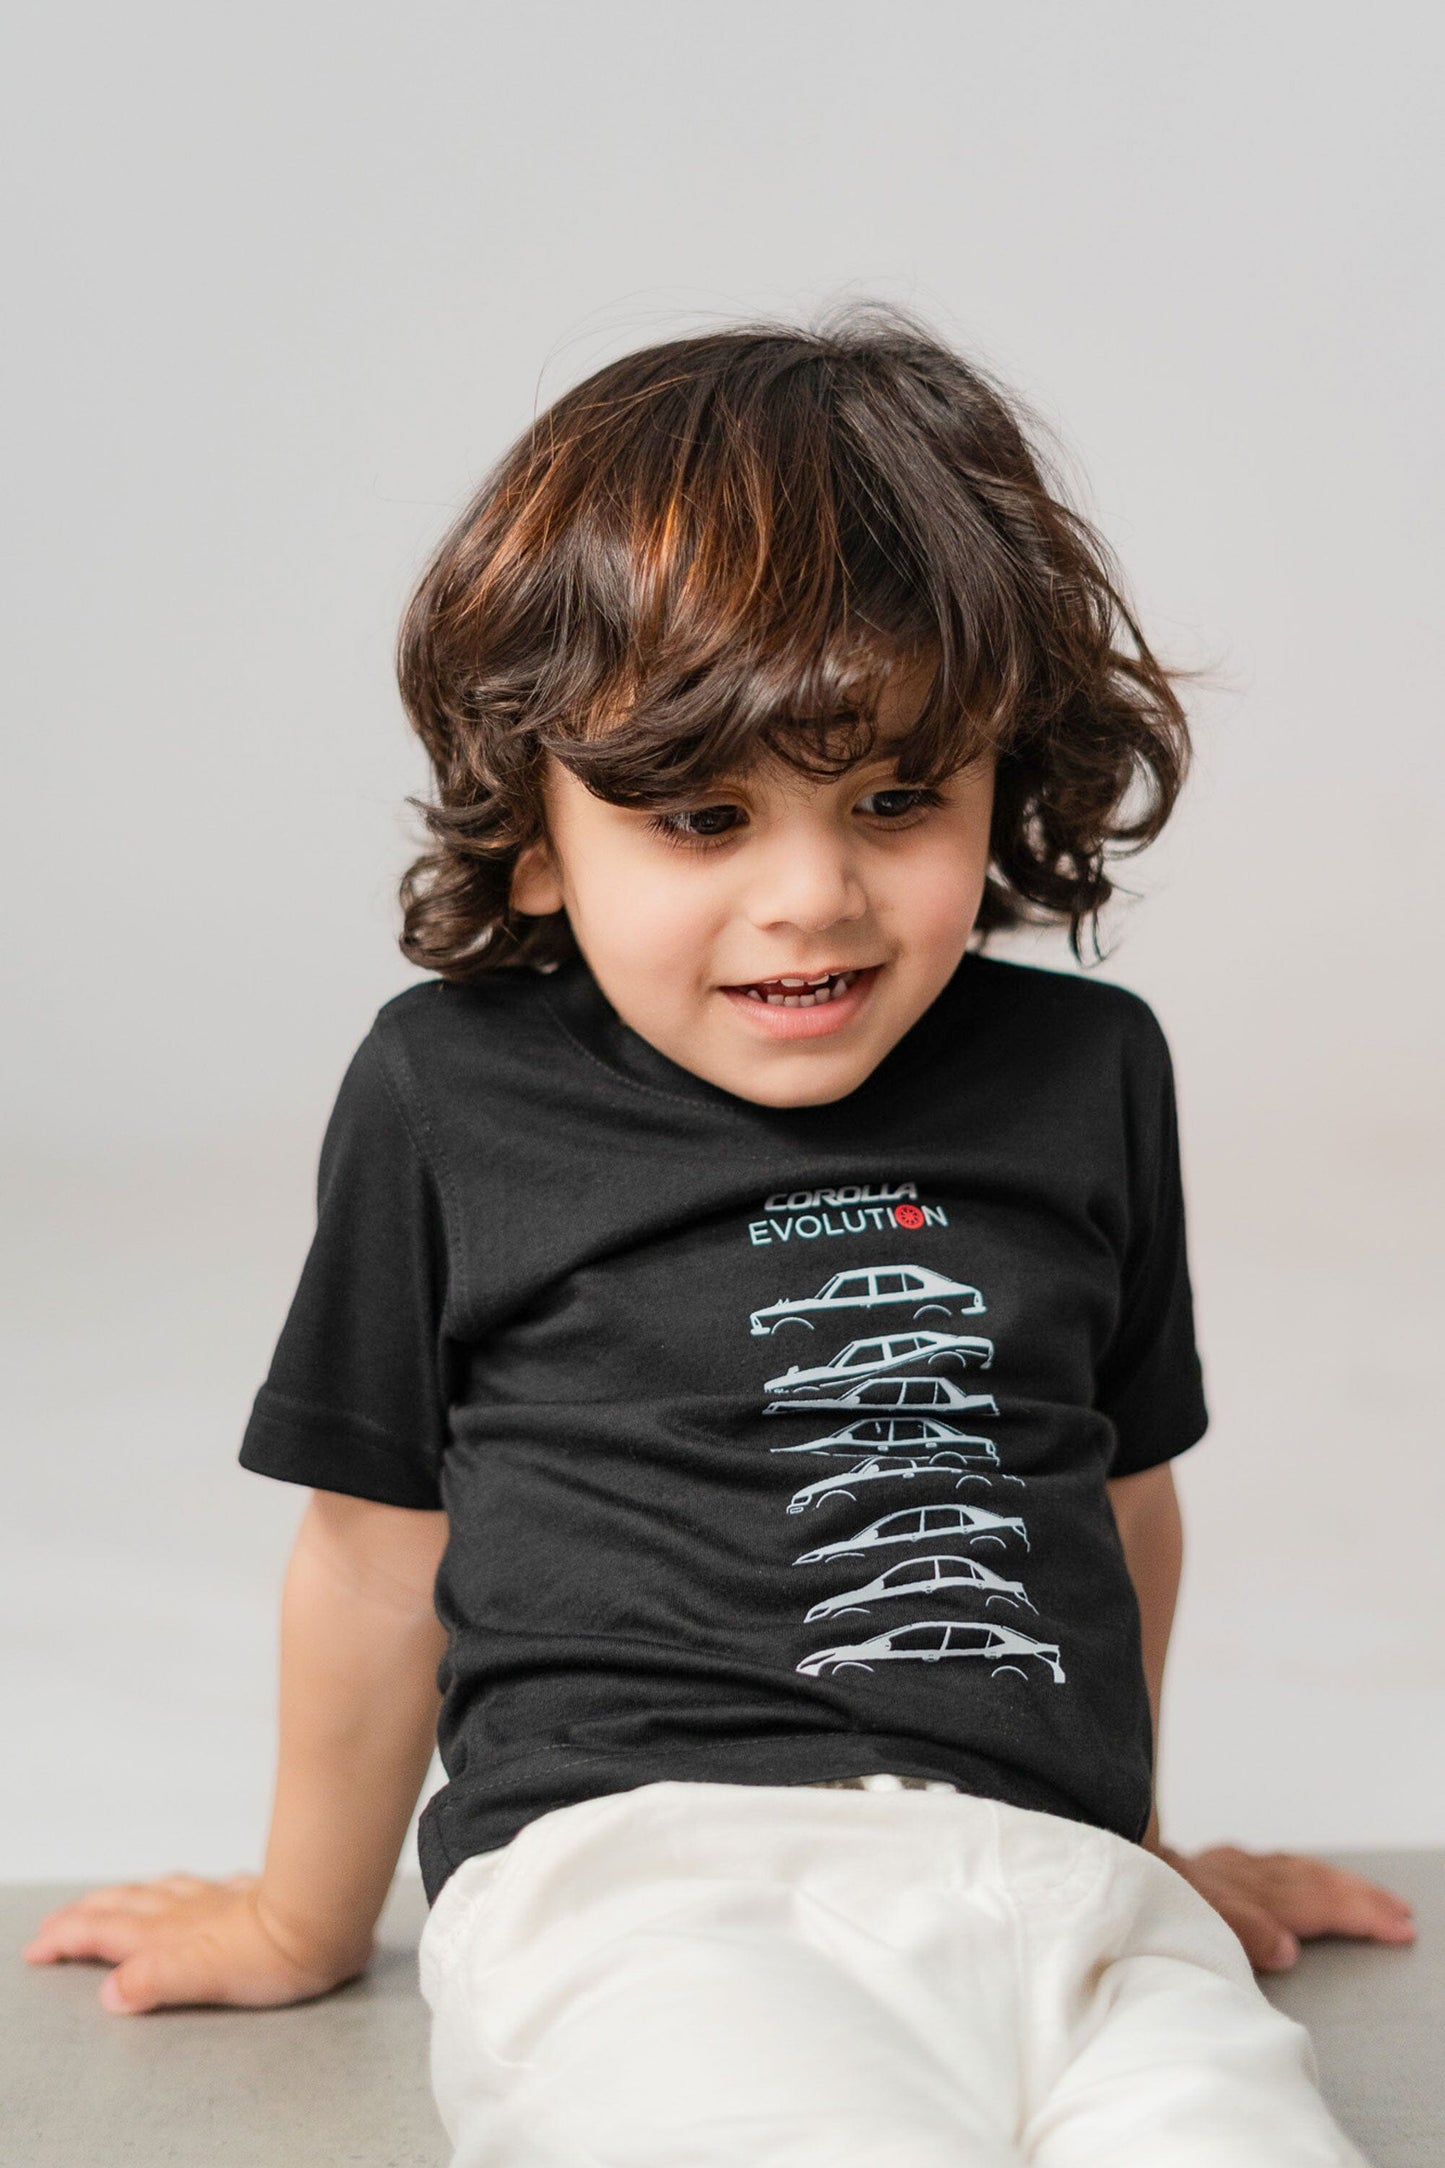 Polo Republica Boy's PakWheels Corolla Evolution Printed Tee Shirt